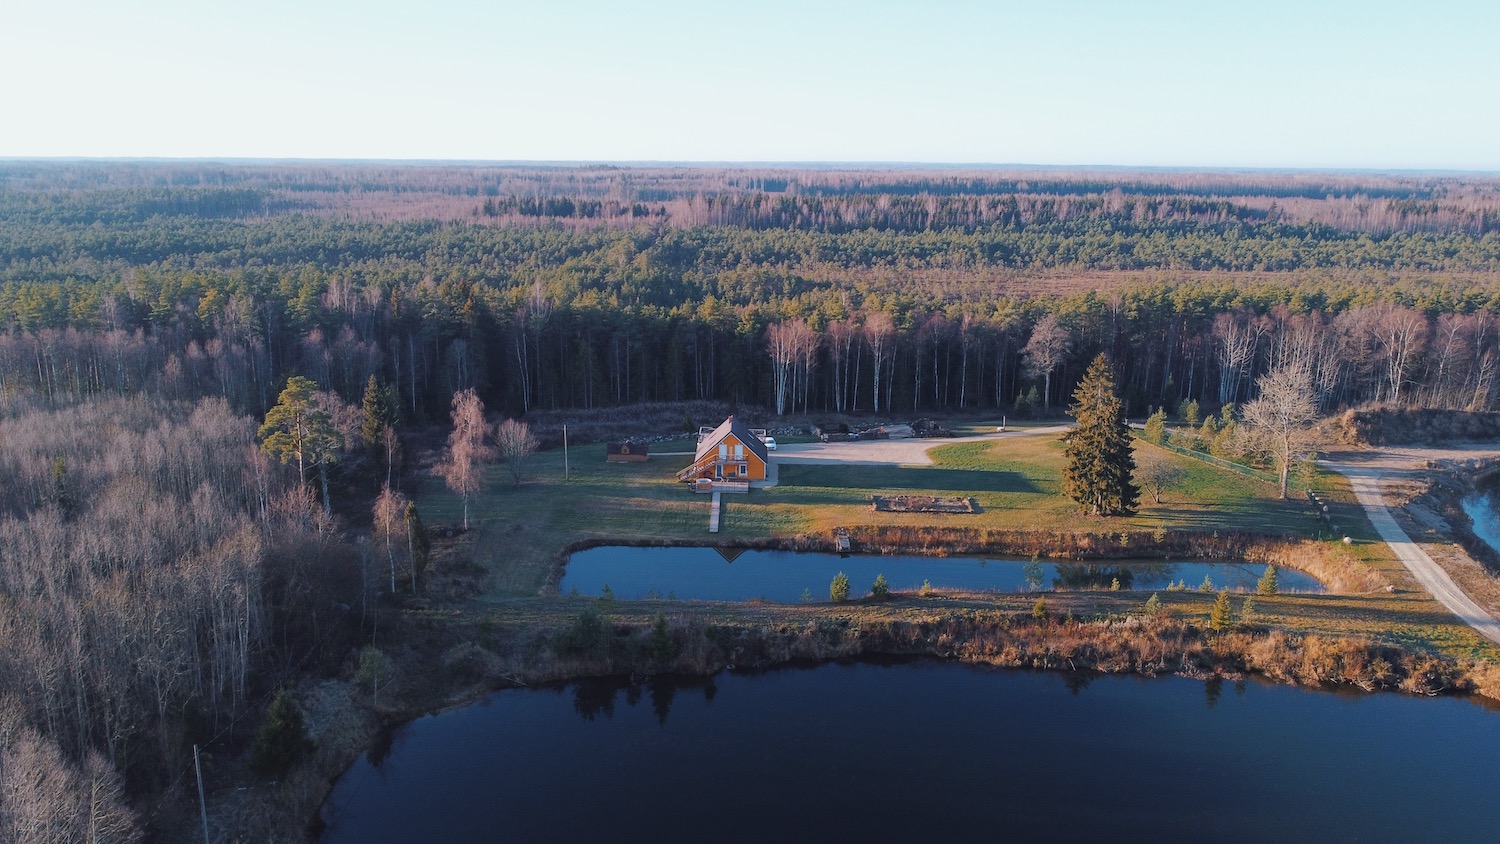 Best Estonian holiday homes in Estonia, Pihlaka hunting cabin, Eesti Paigad